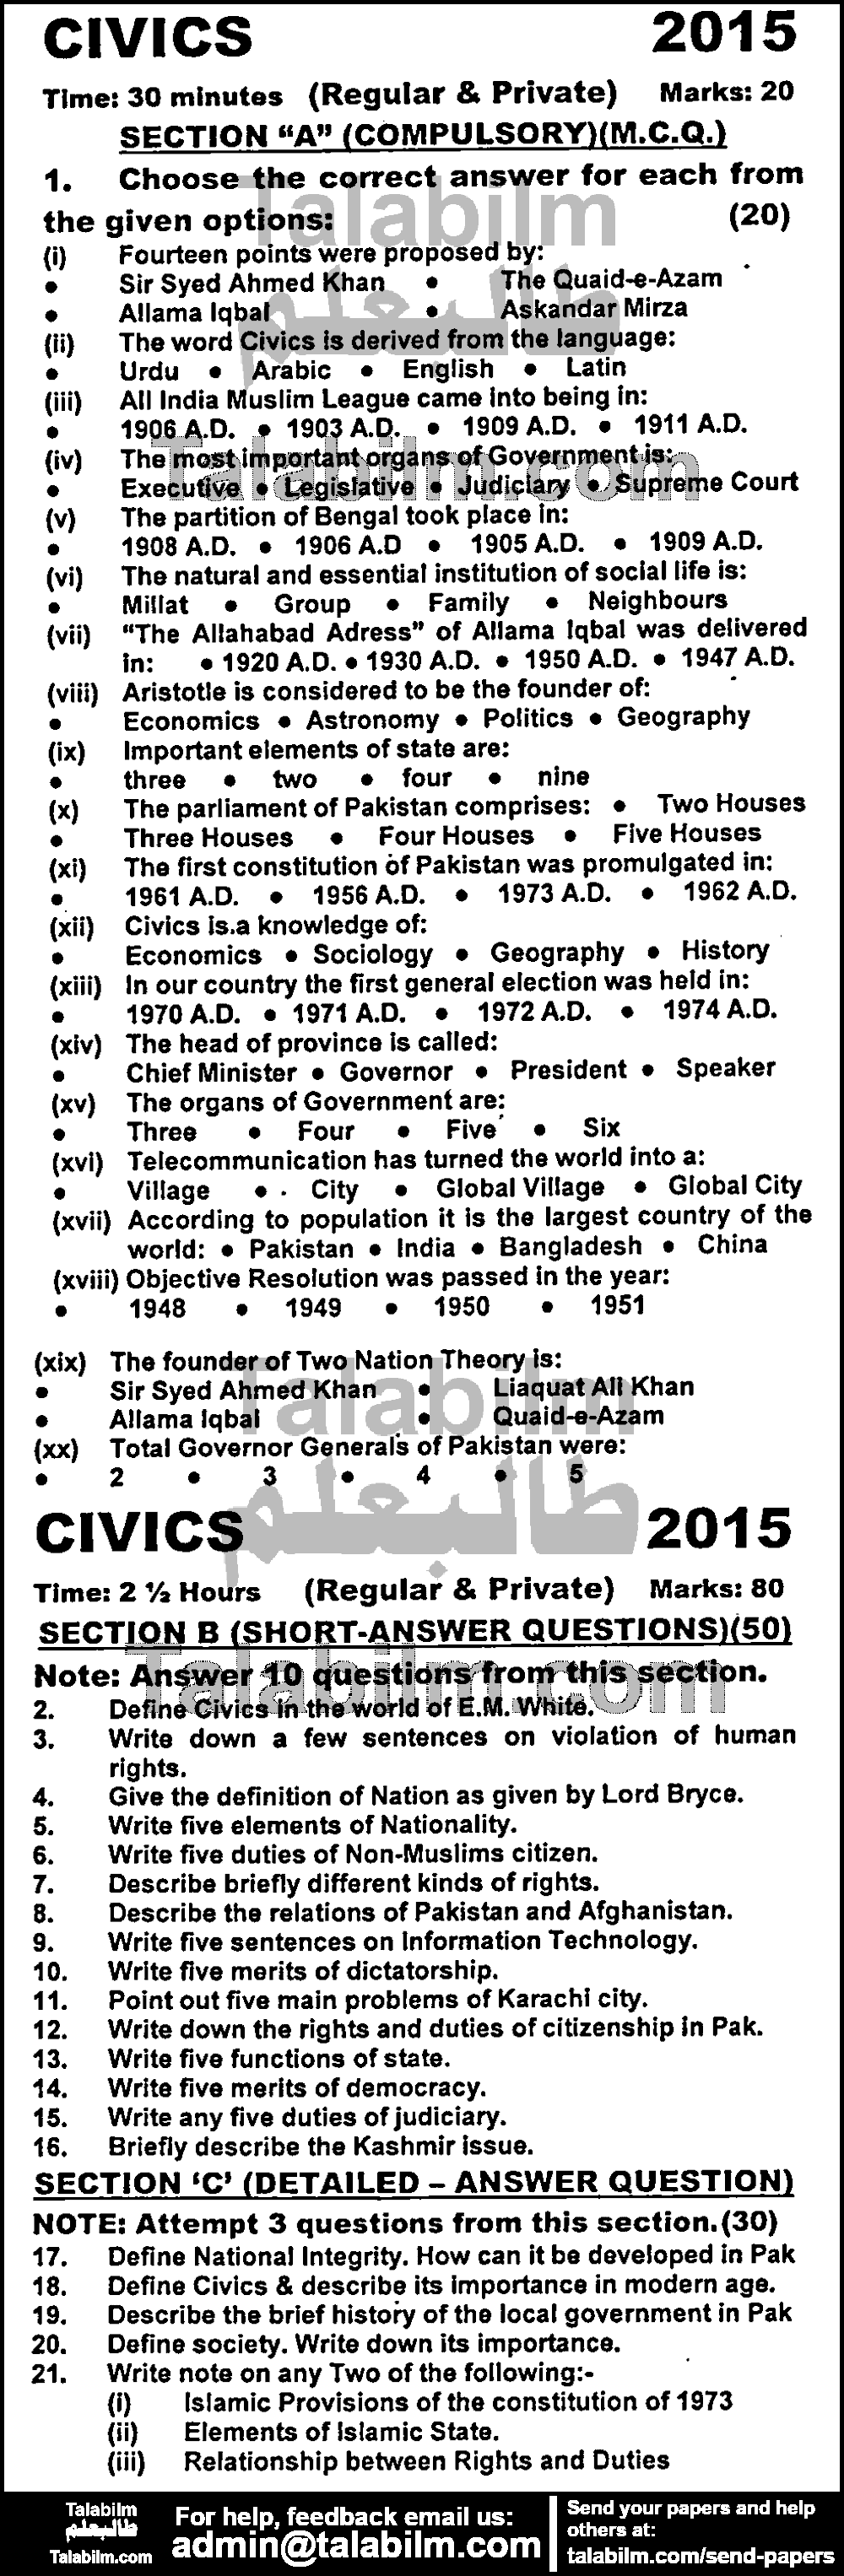 Civics 0 past paper for English Medium 2015 Group-I